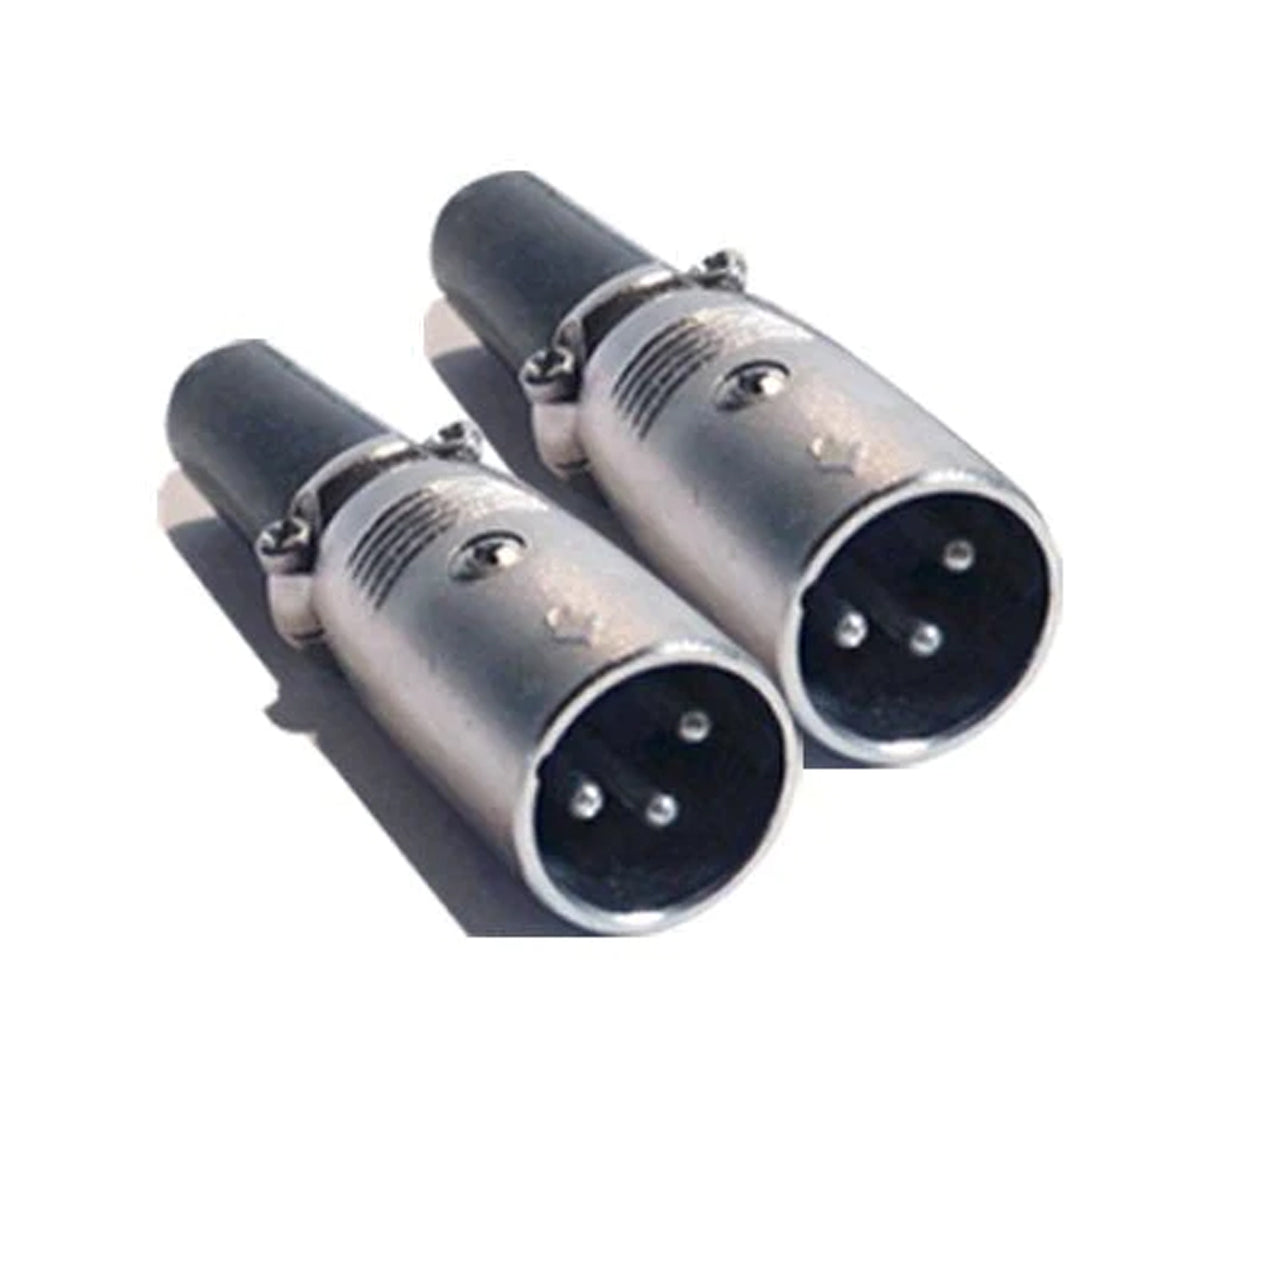 Mr. Dj XLRMH2 1 Pair XLR Male Head 3 Pin Connector Allows for Speaker Cables